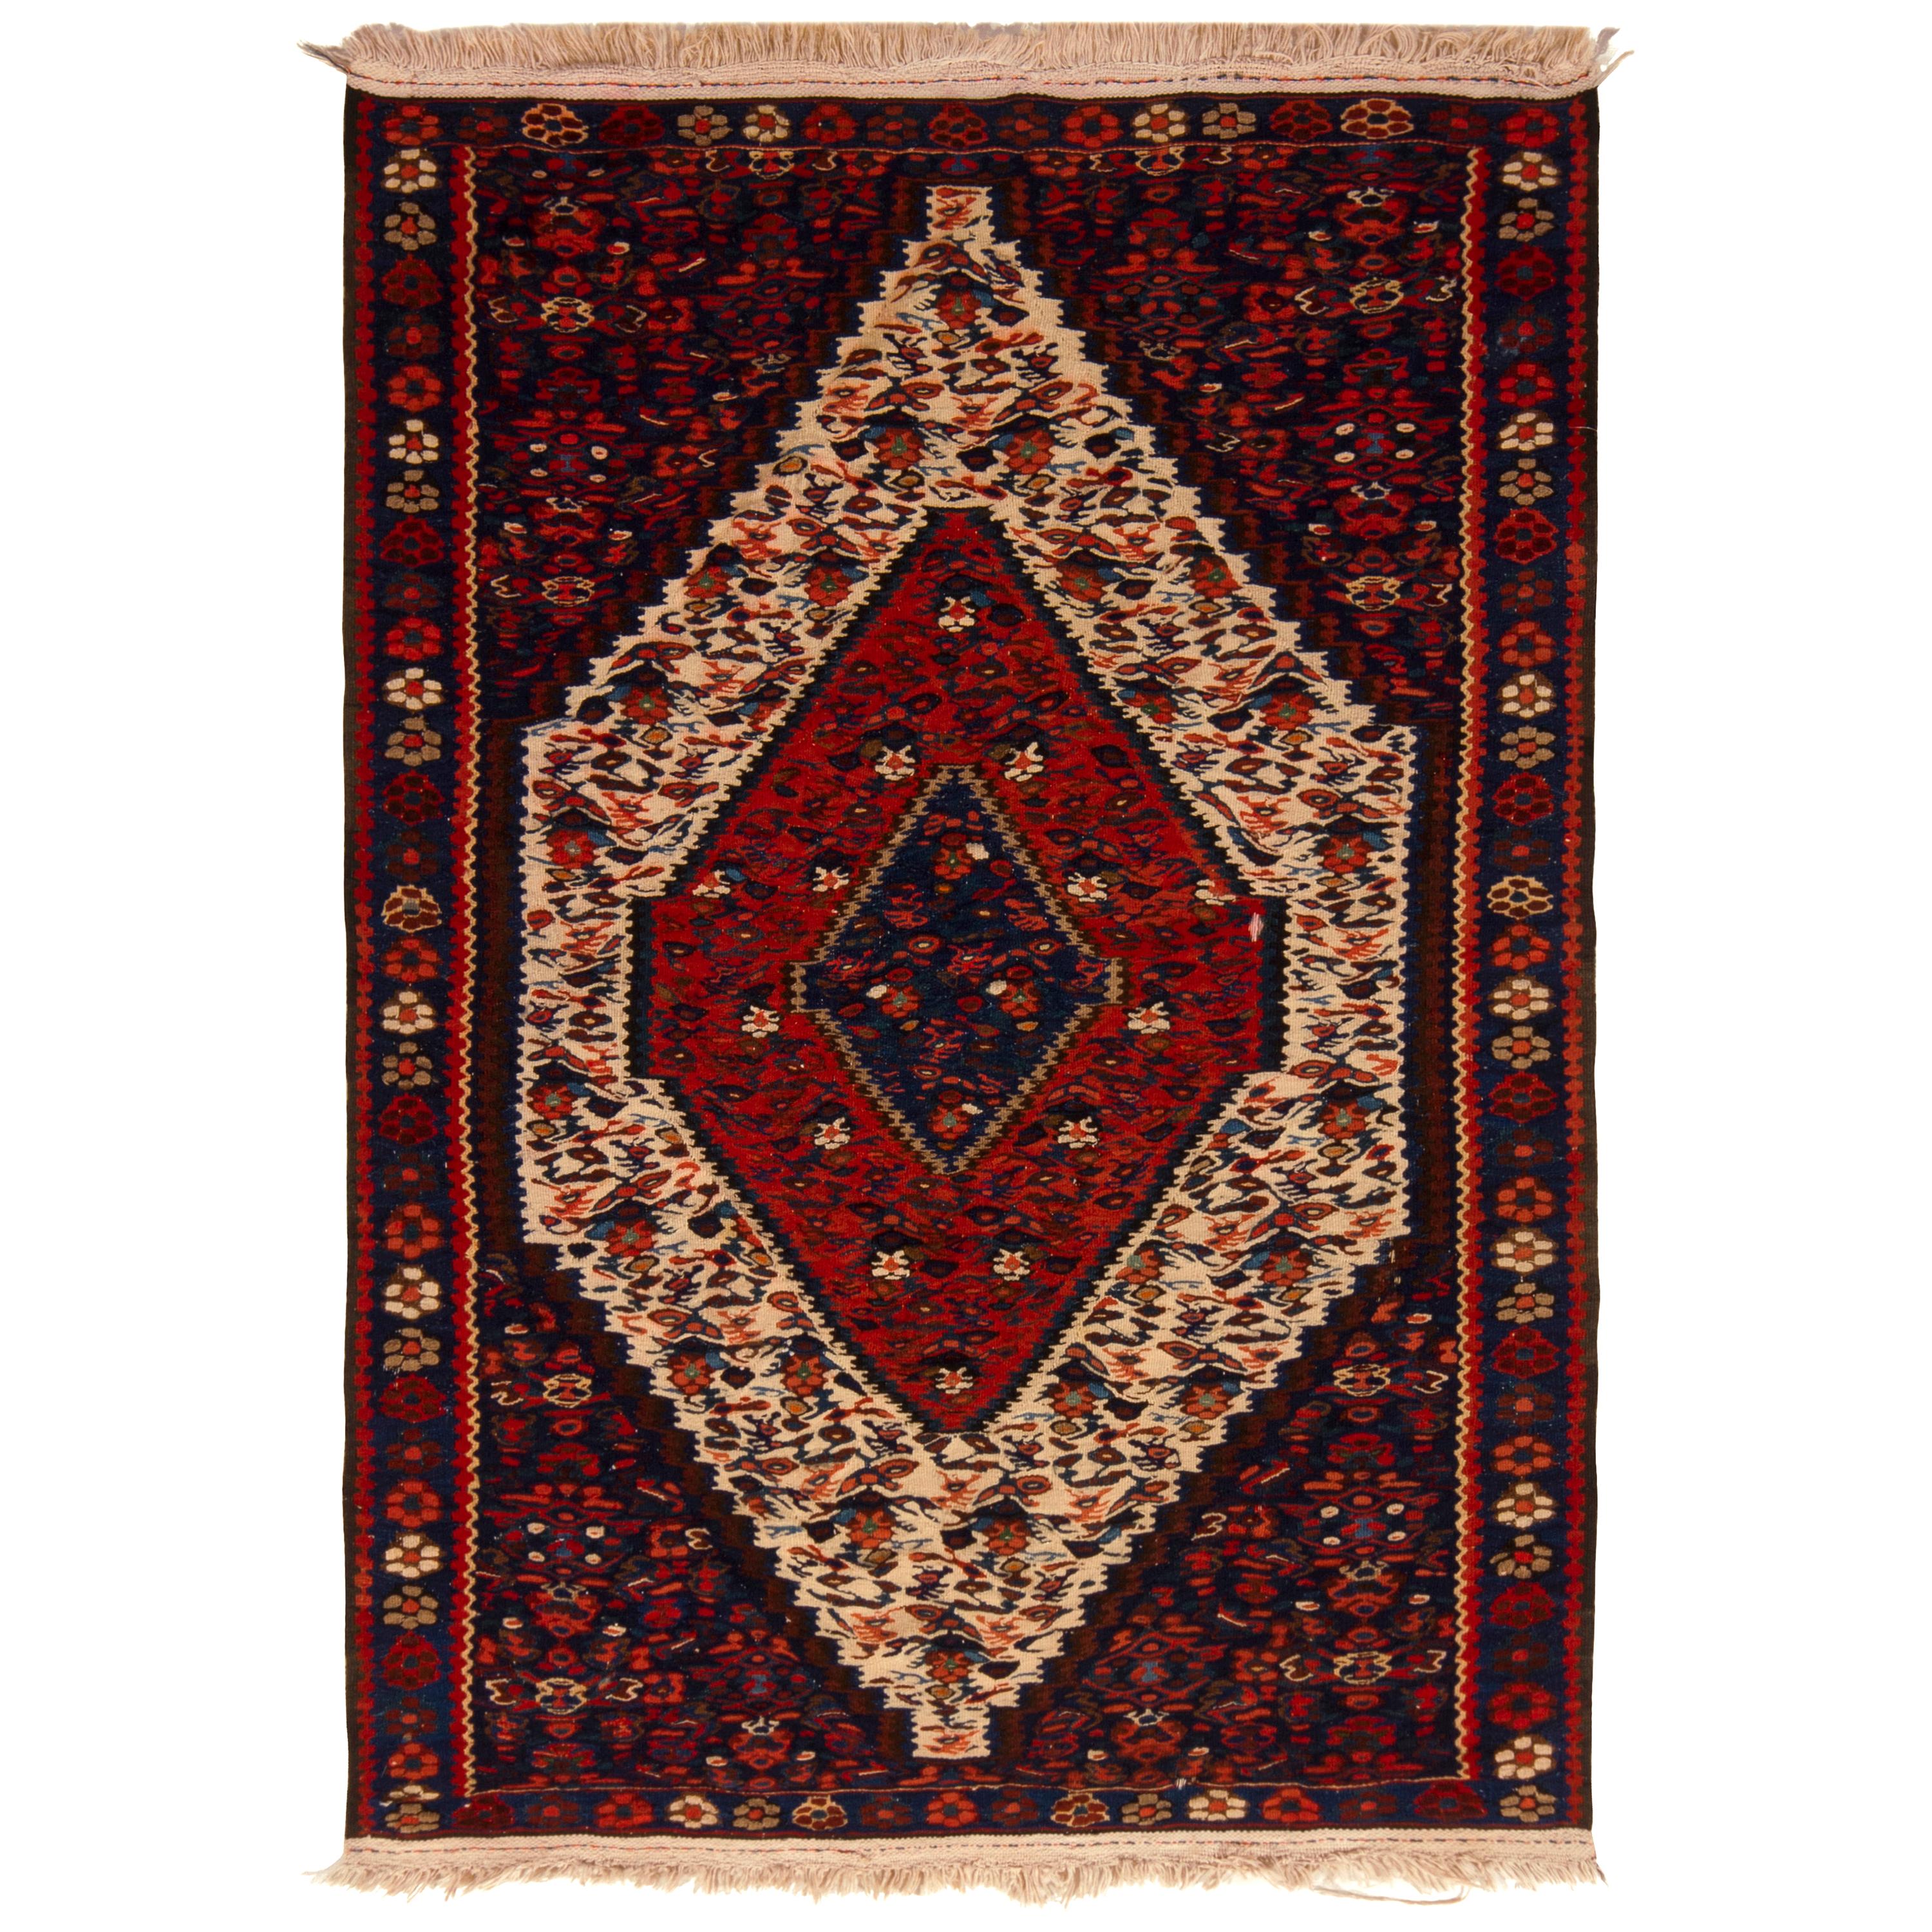 Midcentury Persian Kilim Rug Wool Red Cream Floral Flat-Weave by Rug & Kilim For Sale